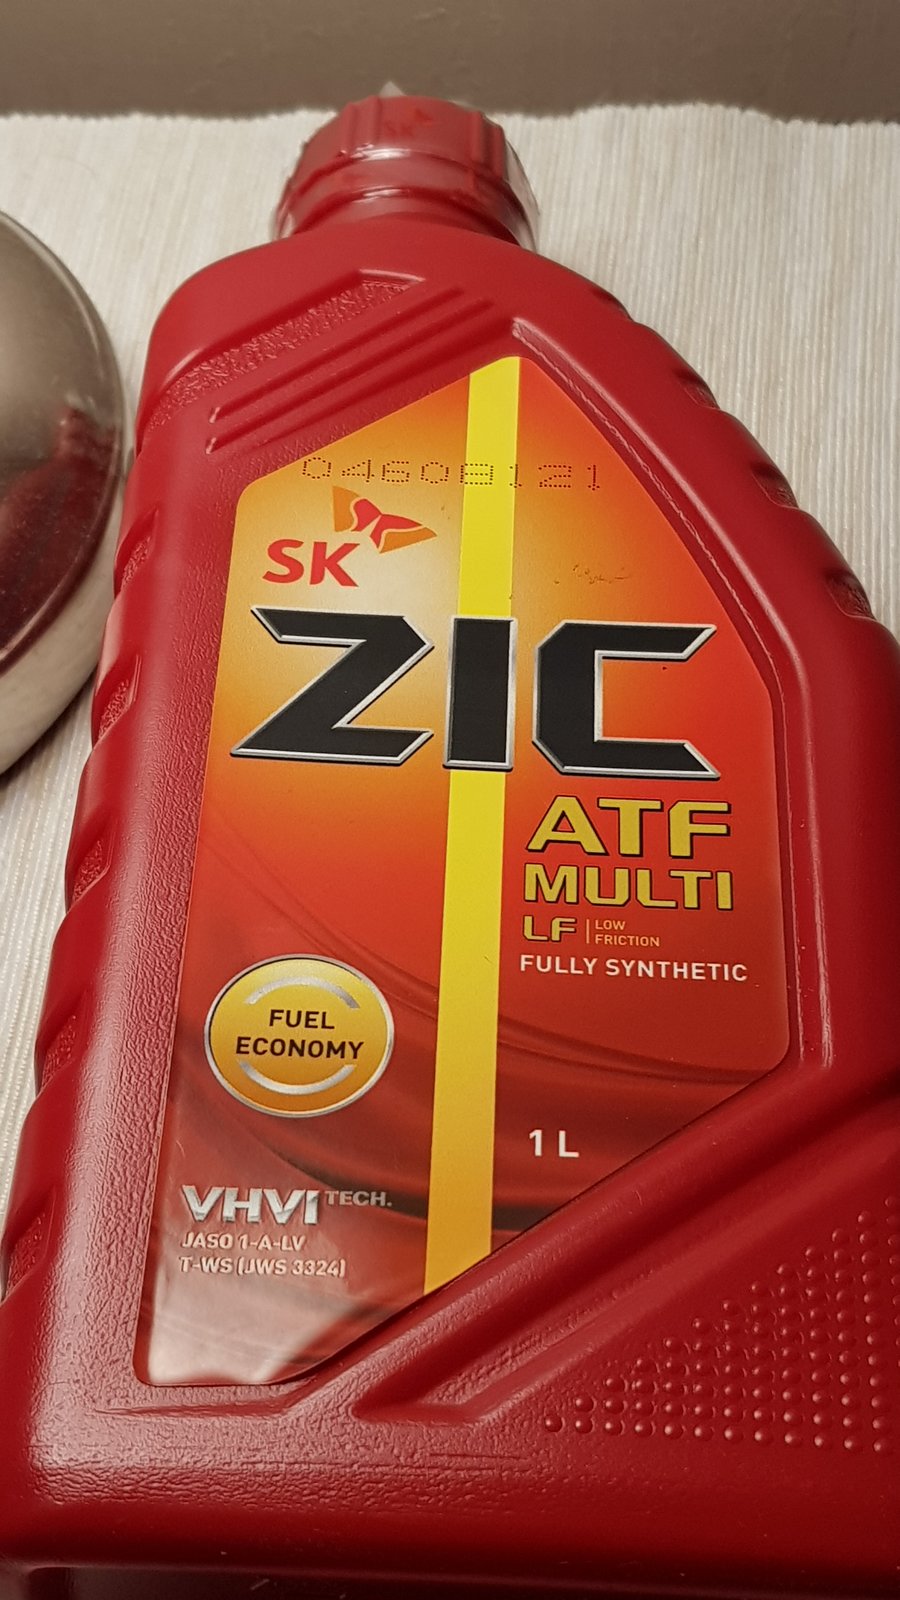 Zic atf multi купить